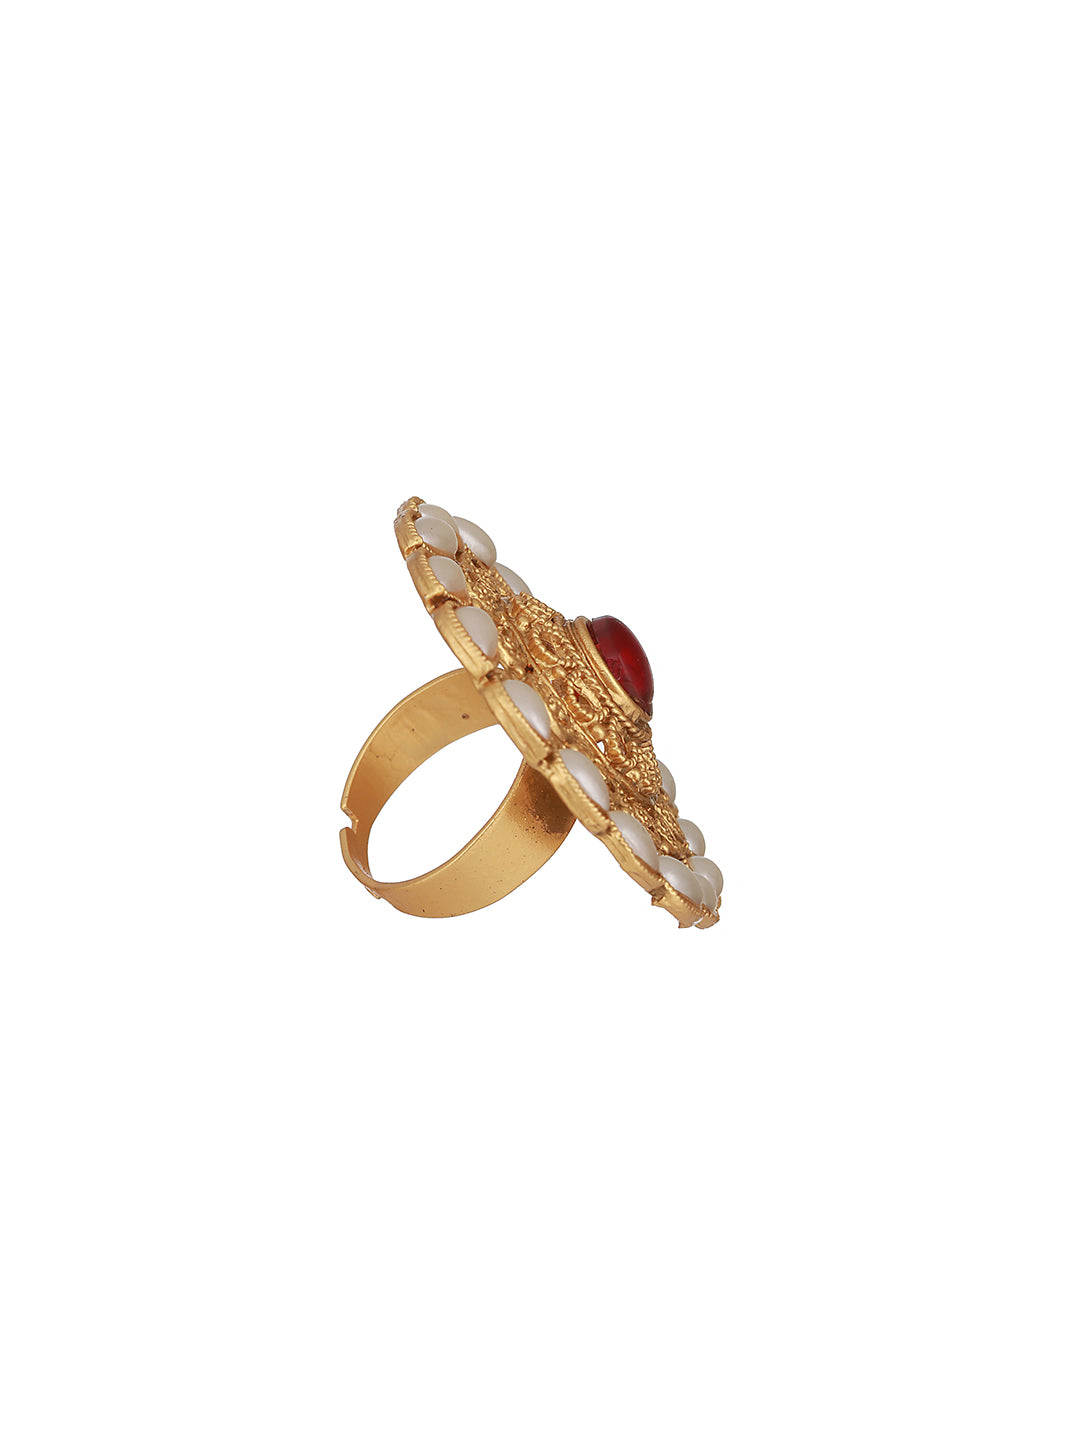 Jazz Abd Sizzle Gold Plated Red Stone Studded & Beaded Adjustable Finger Rings - Jazzandsizzle